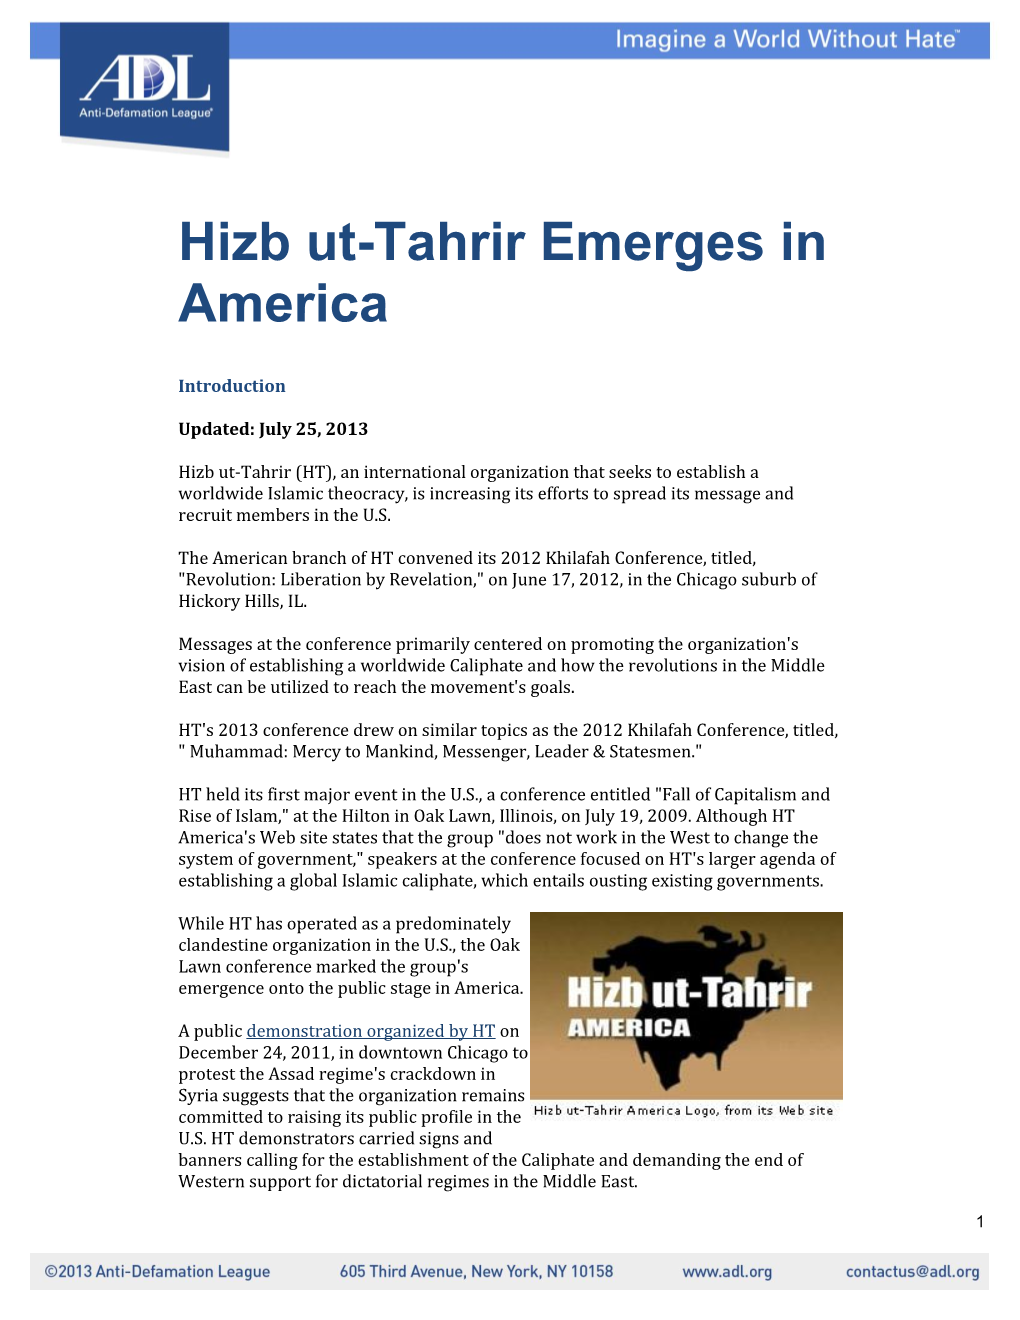 Hizb Ut-Tahrir Emerges in America